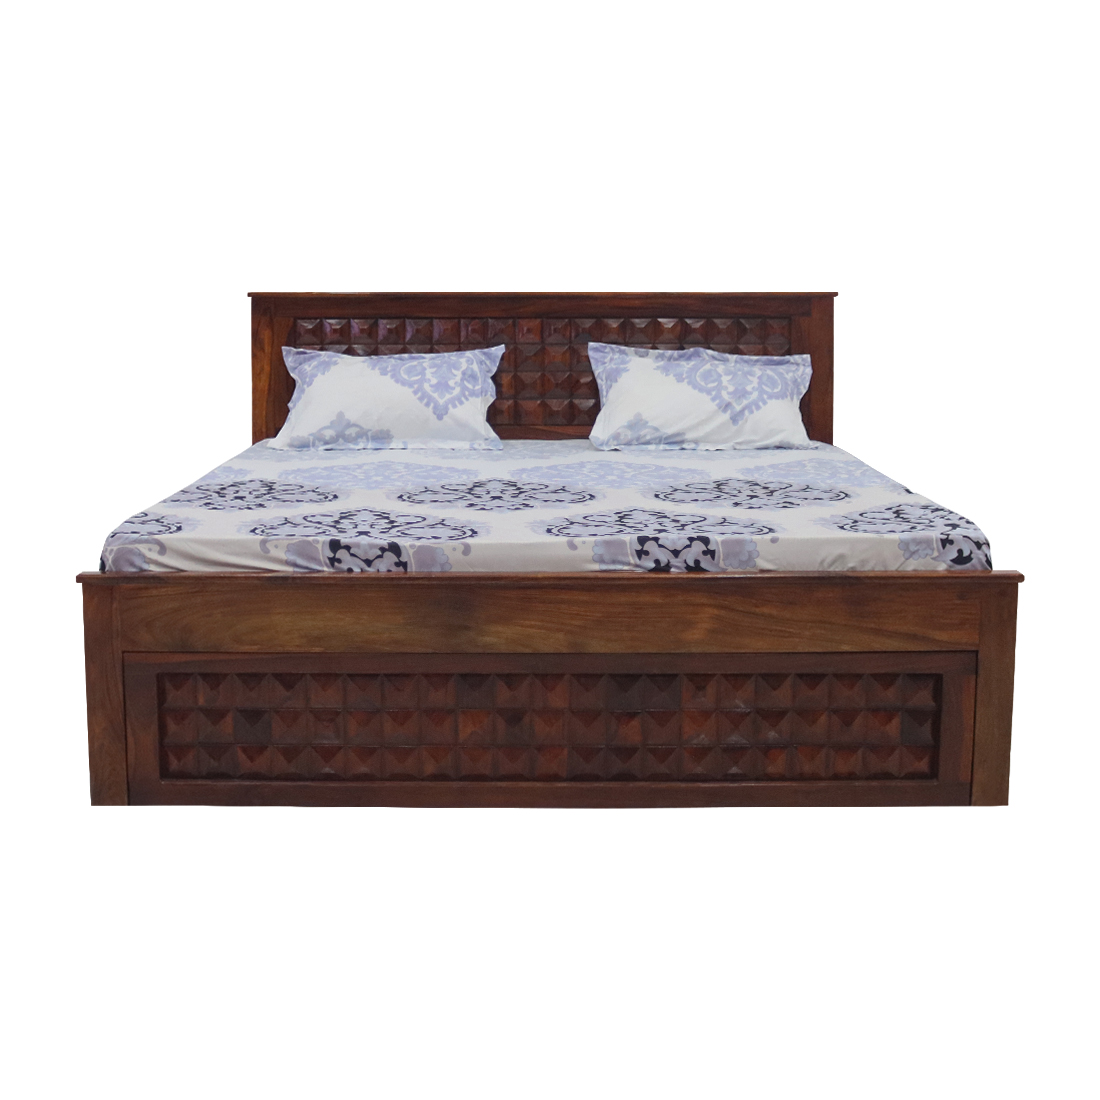 Aaram by zebrs Wood Oak Finish Queen Size Double Cart Bed